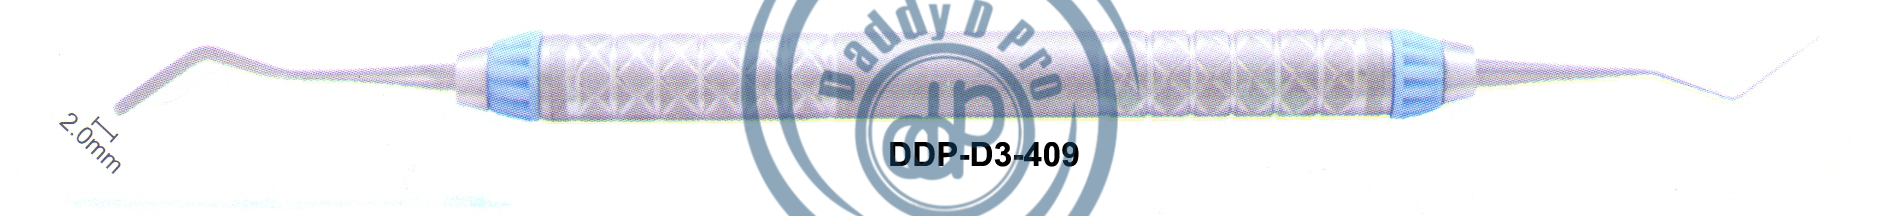 images/DDP-D3-409.png